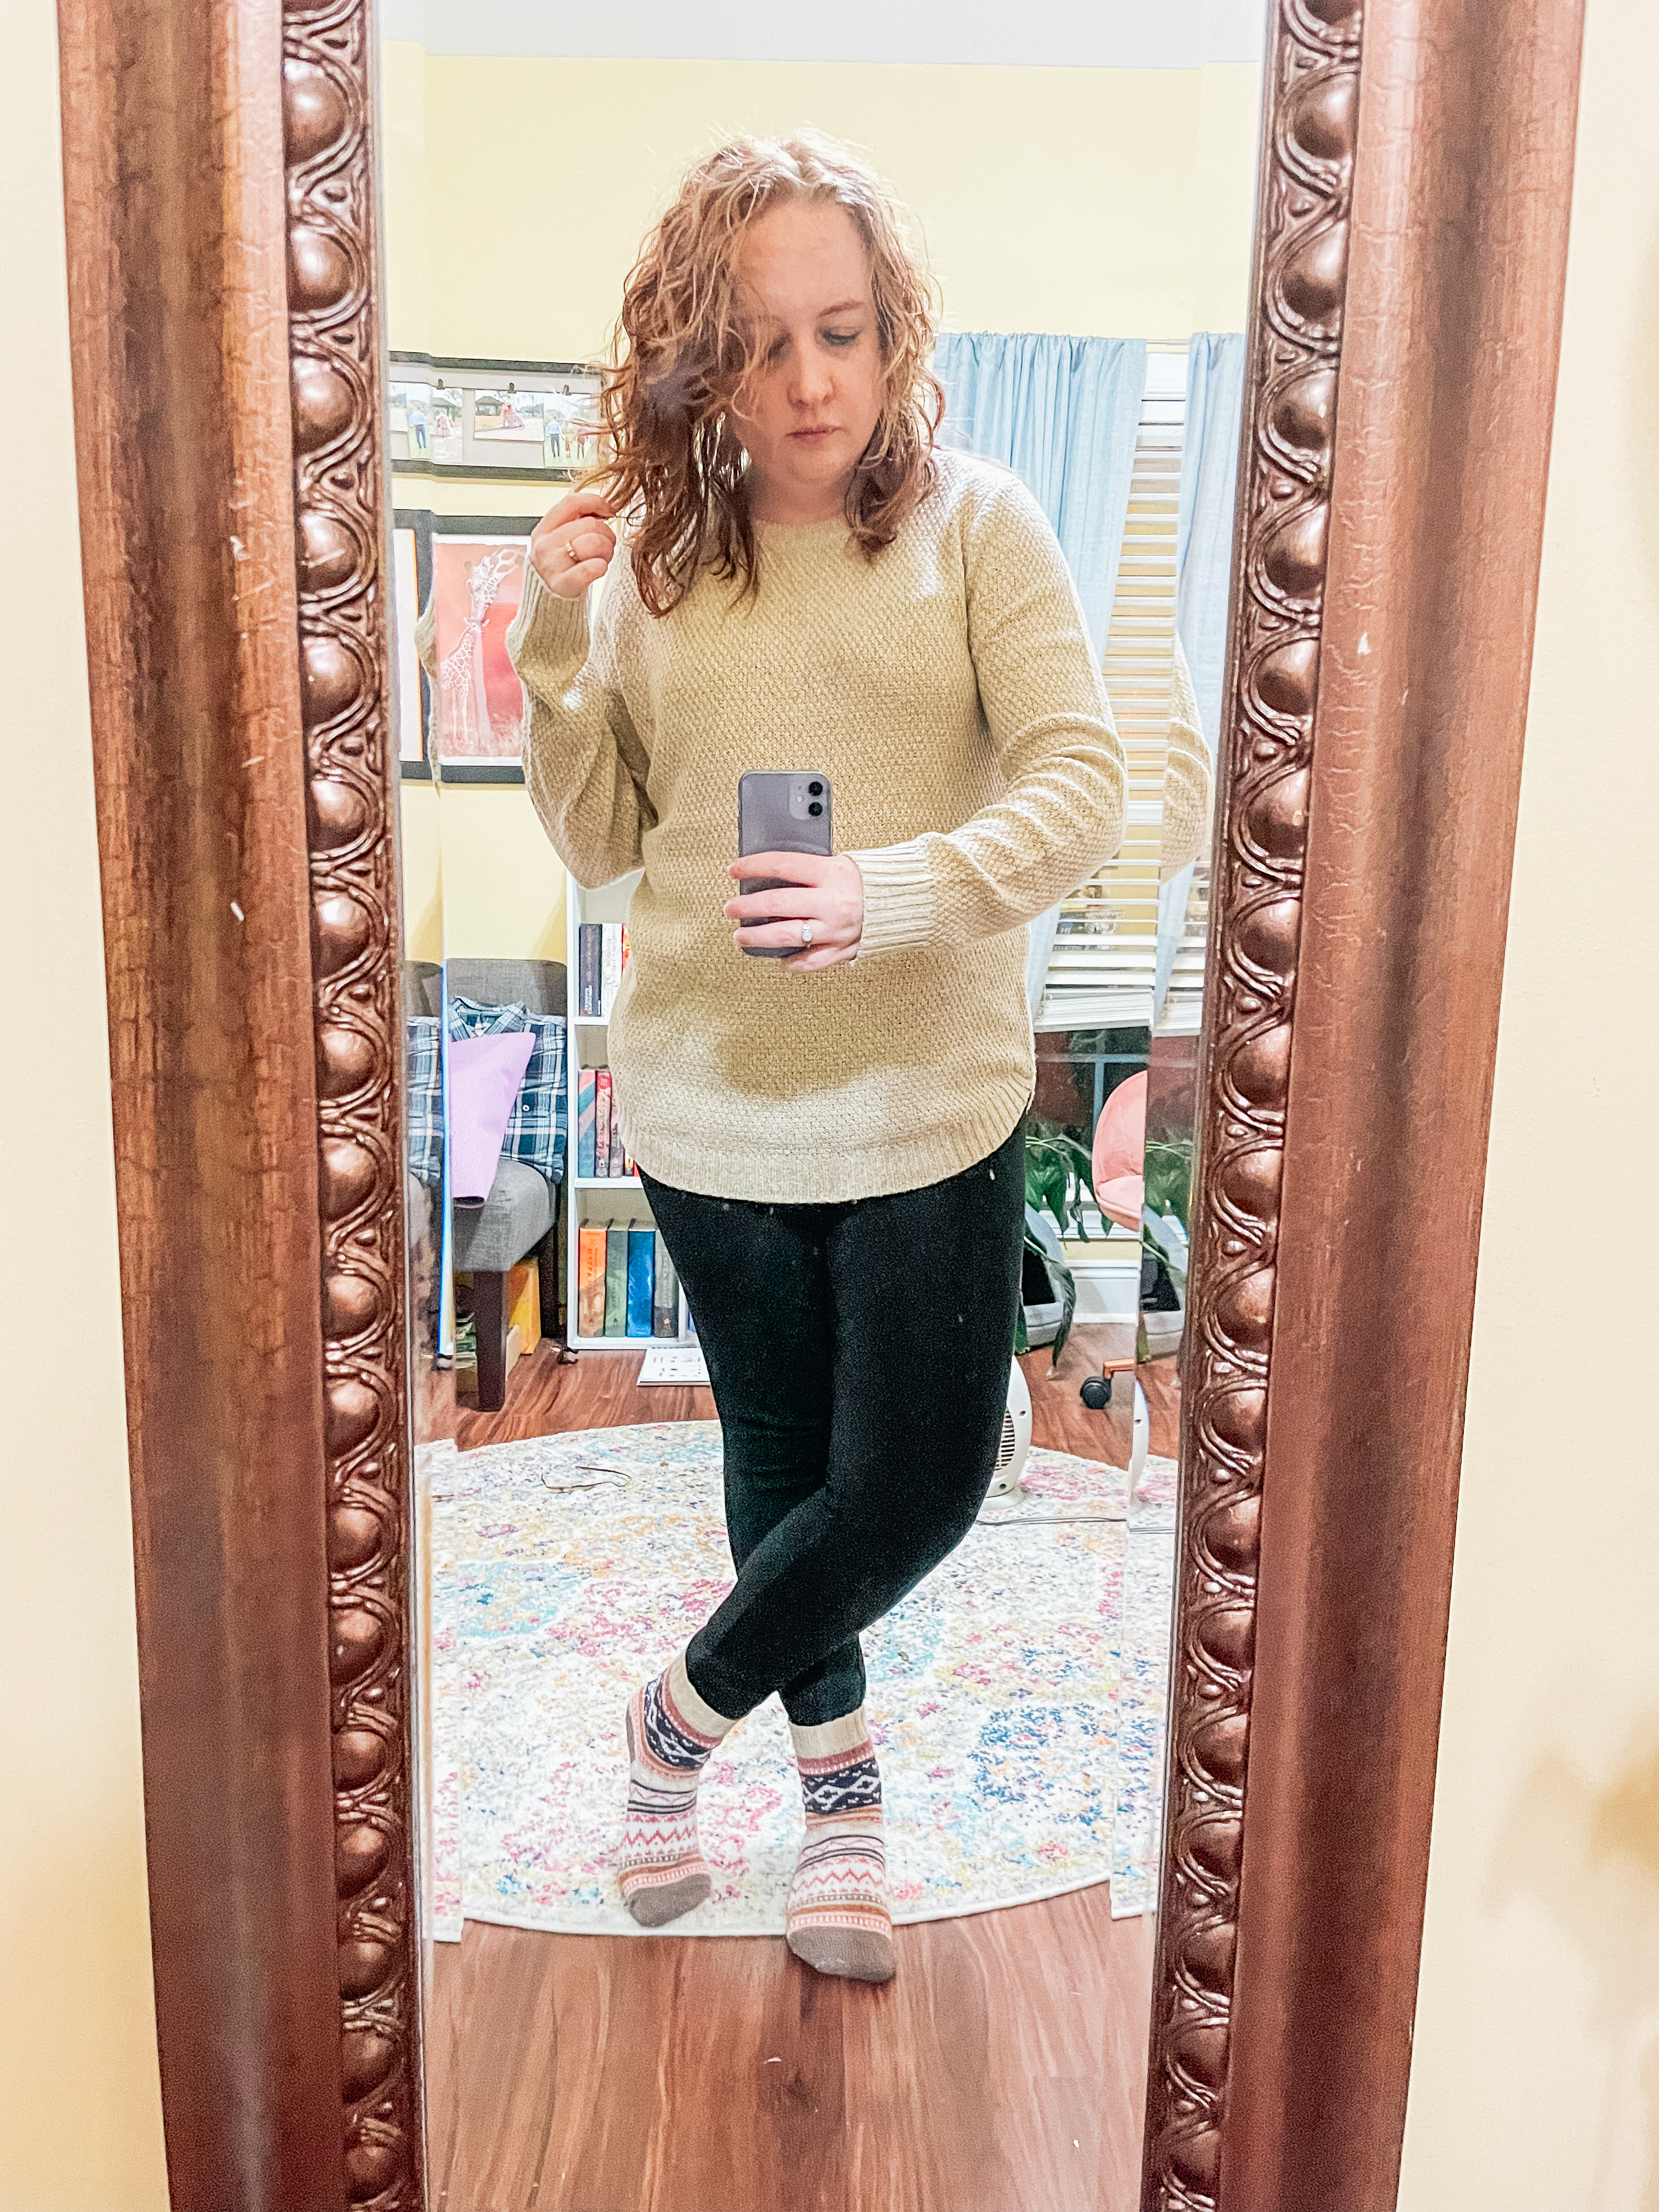 oatmeal-sweater-leggings-sweater-socks